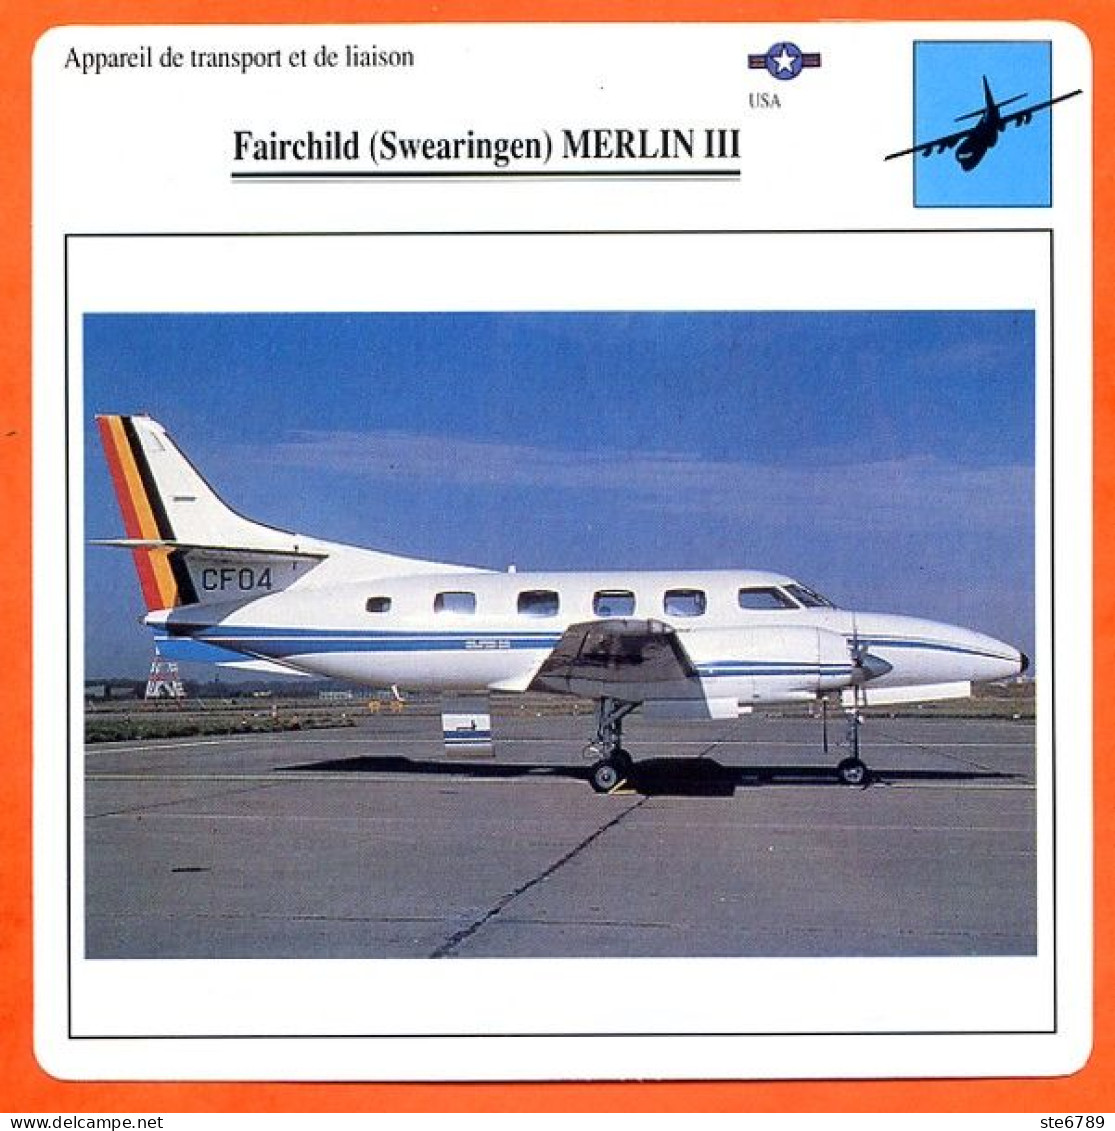 Fiche Aviation Fairchild Swearingen MERLIN III / Avion Transport Et Liaison USA Avions - Aerei